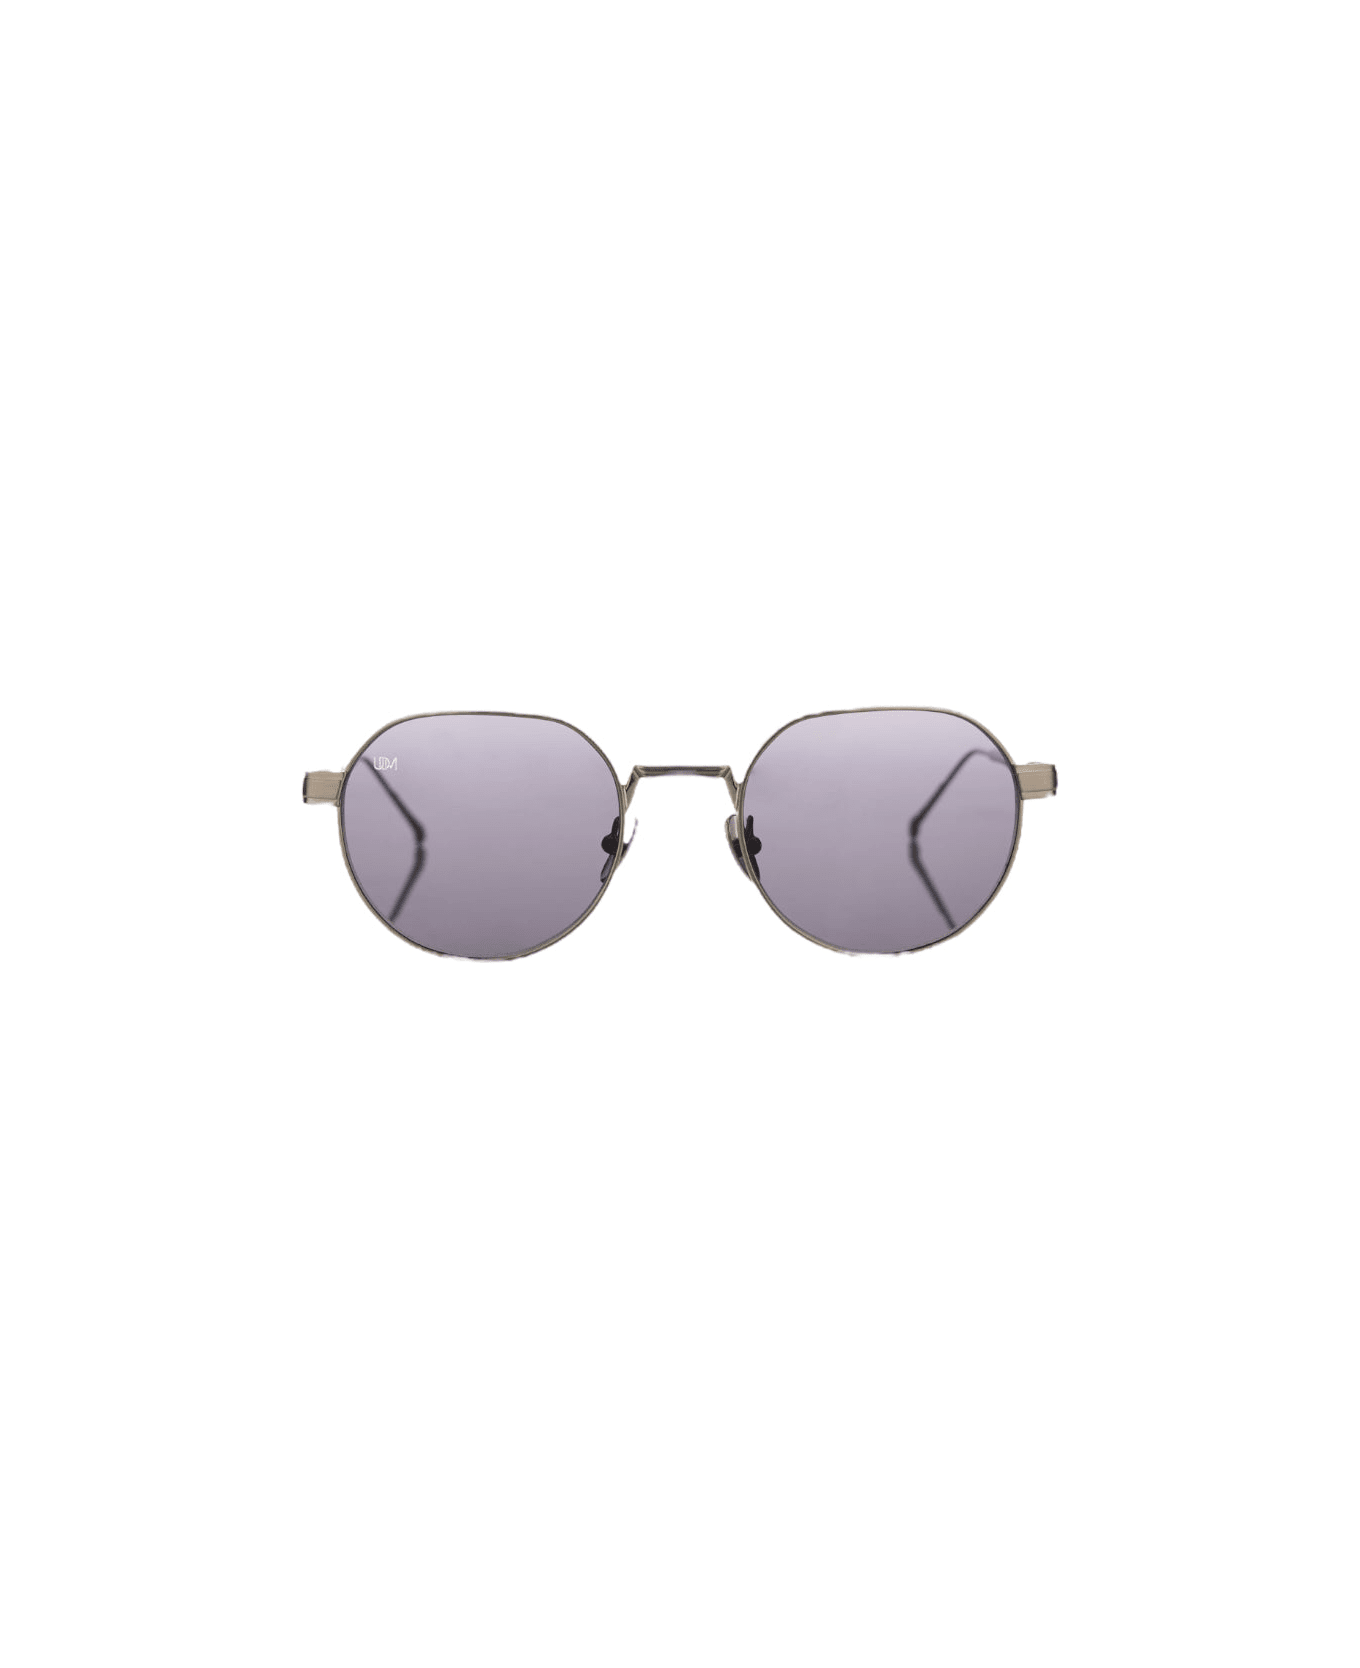 Brand Unique Claude - Silver Sunglasses サングラス